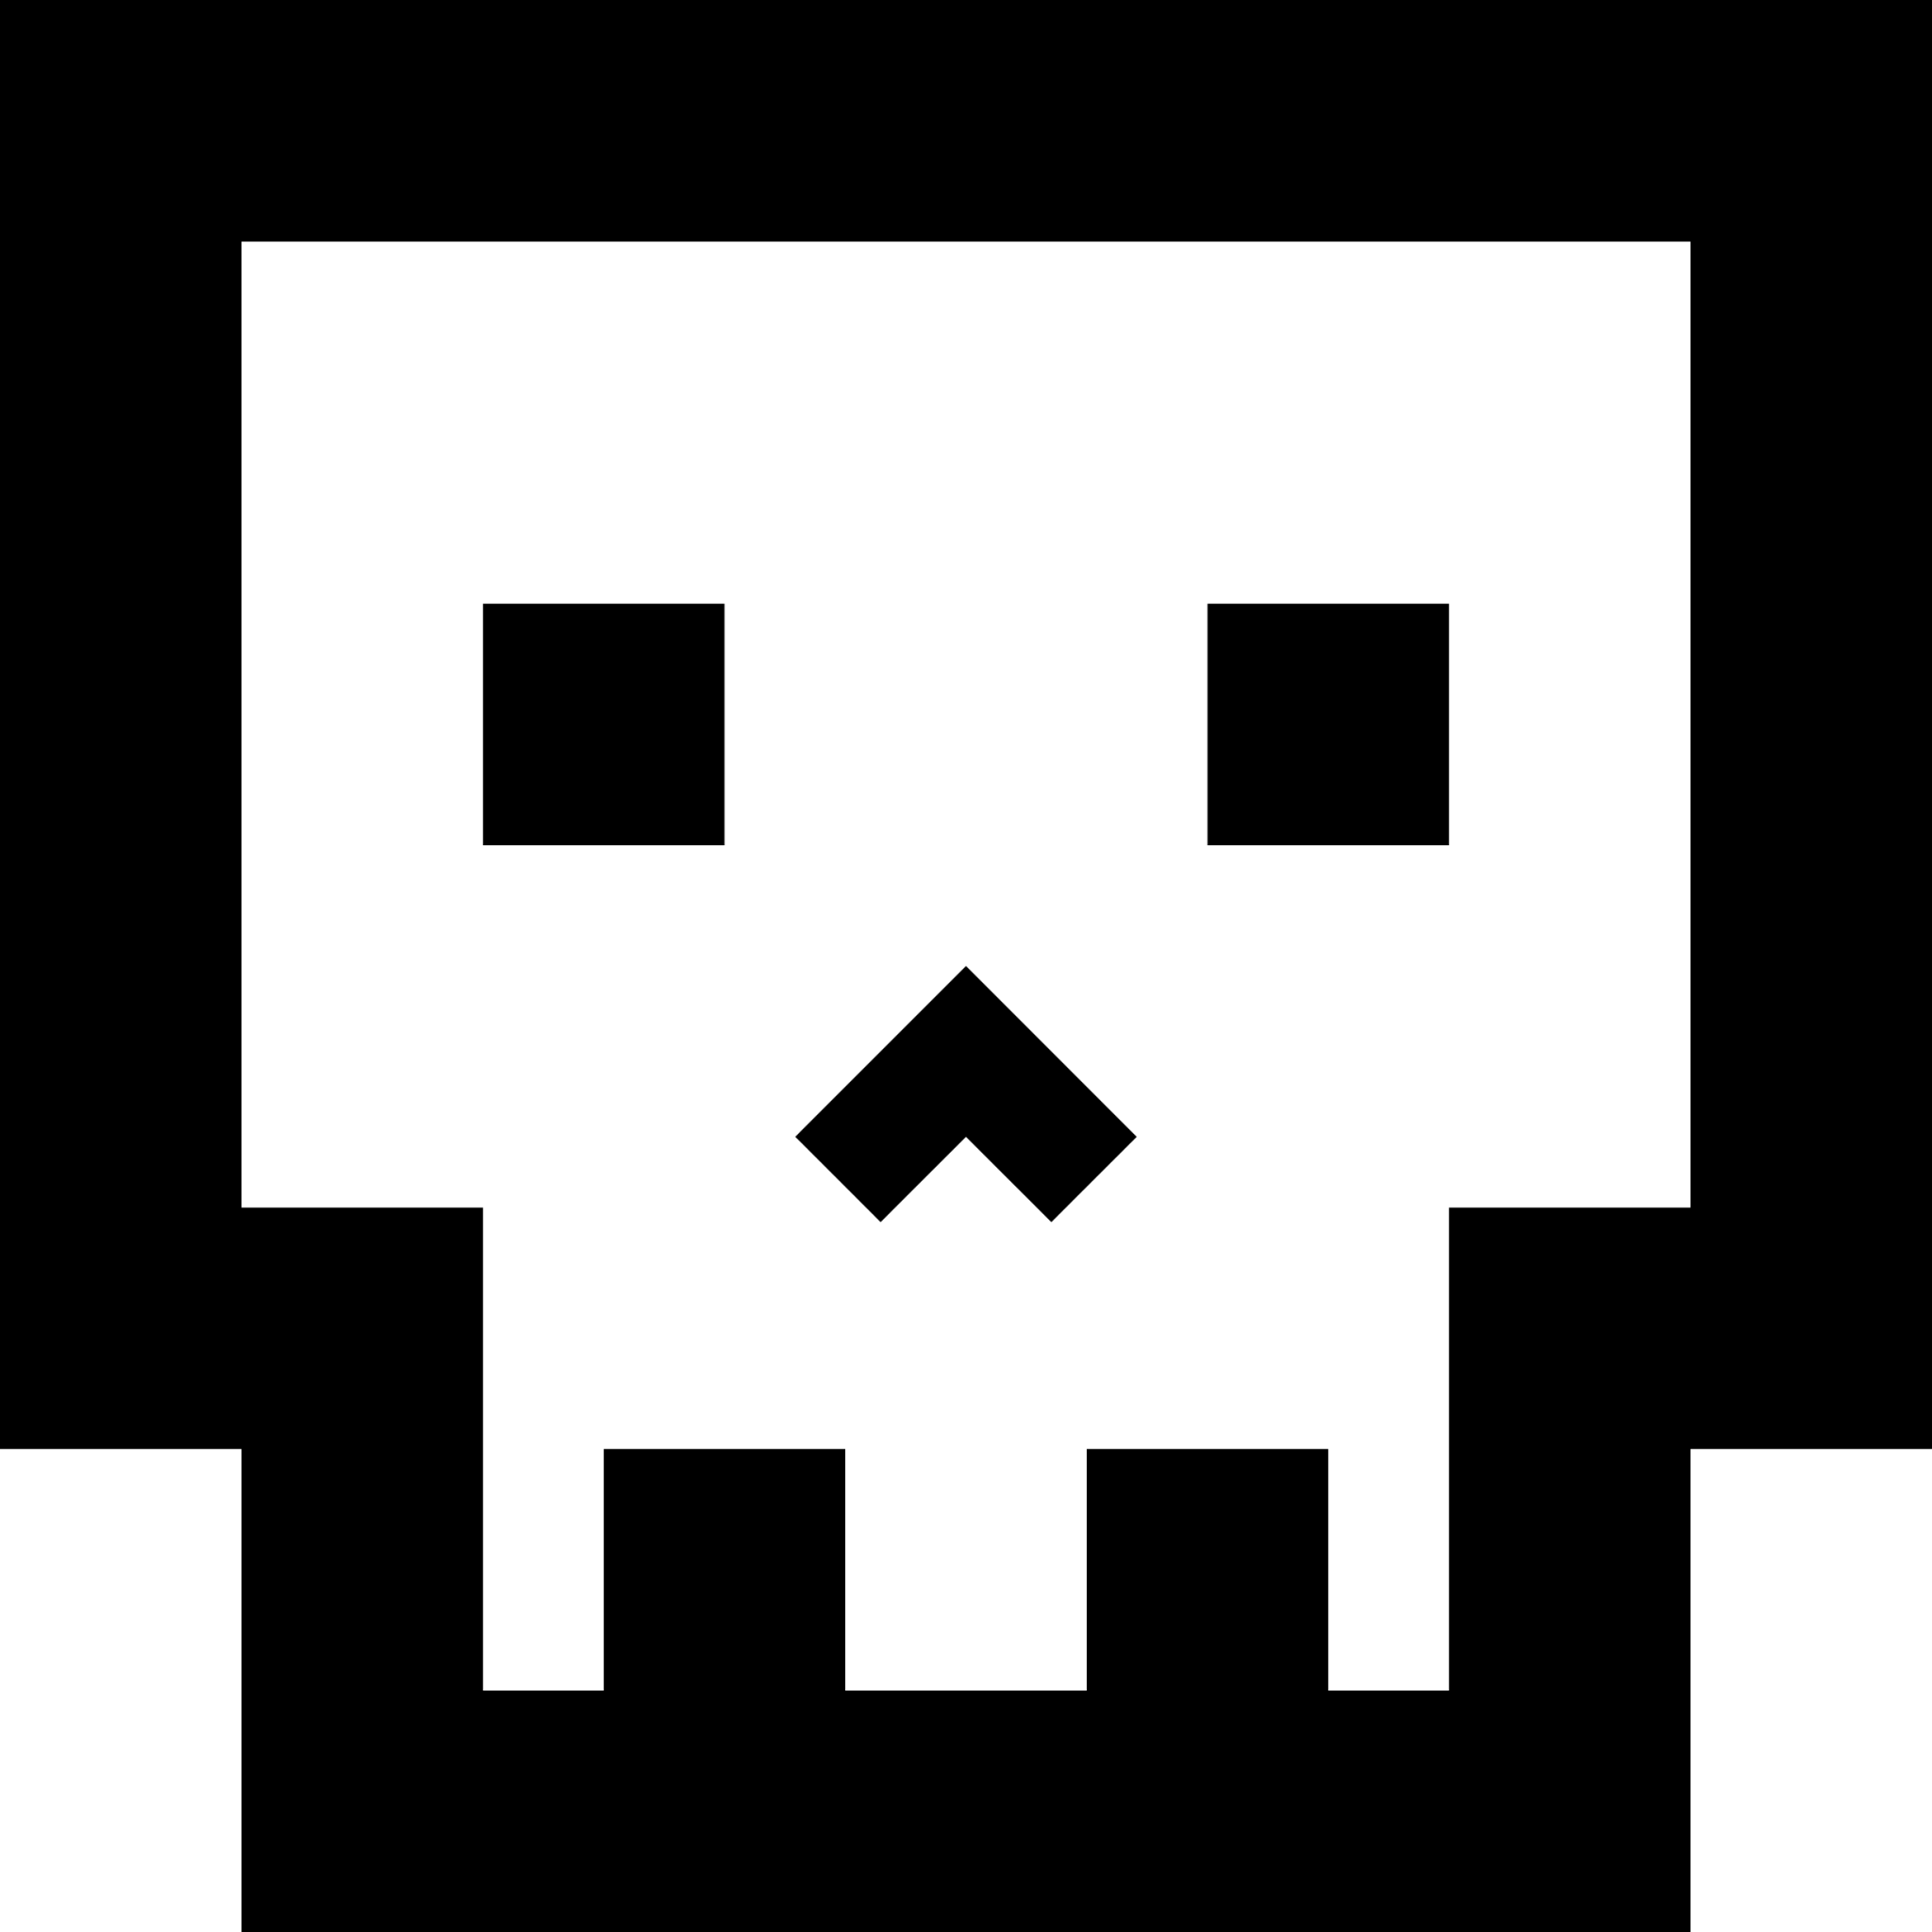 Free Twitter x Logo Black Square Outline SVG, PNG Icon, Symbol